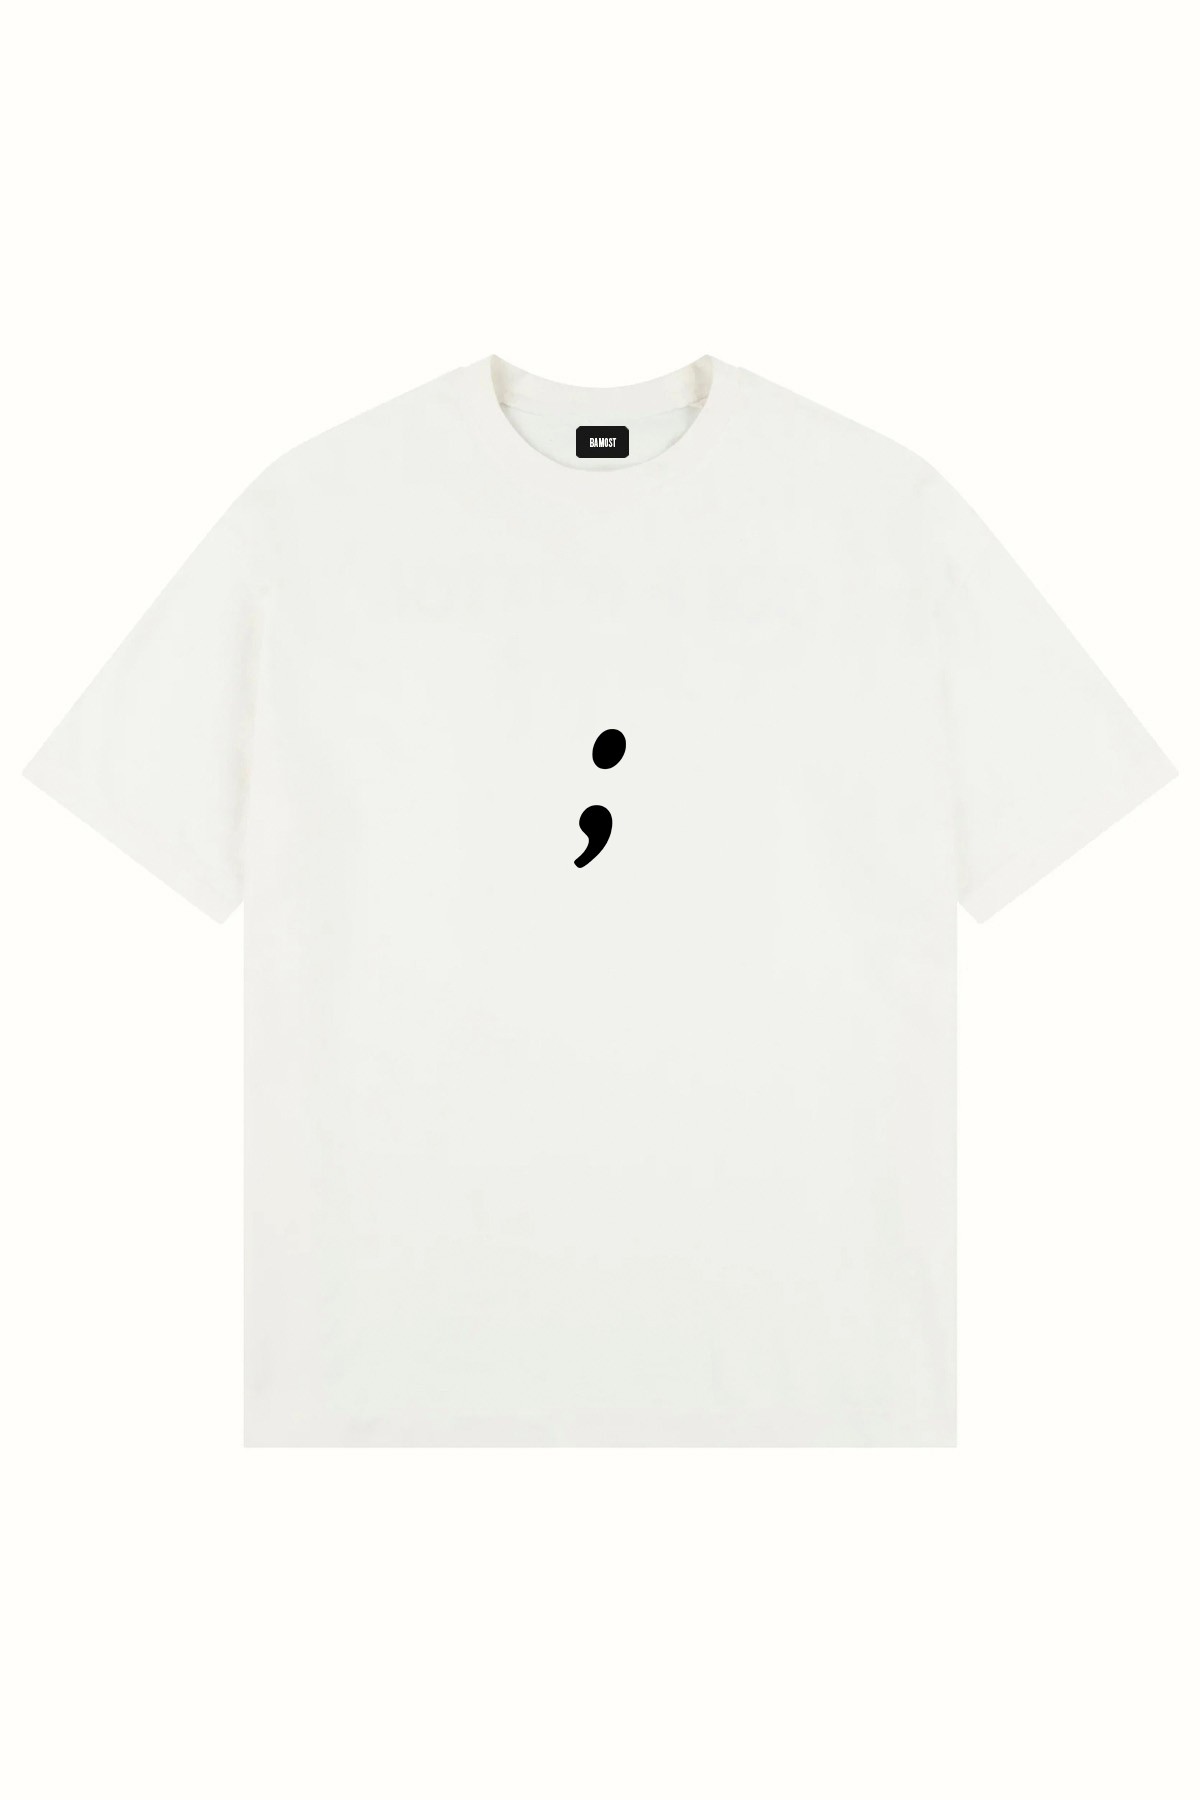 2017 - Oversize Printed T-Shirt - WHITE